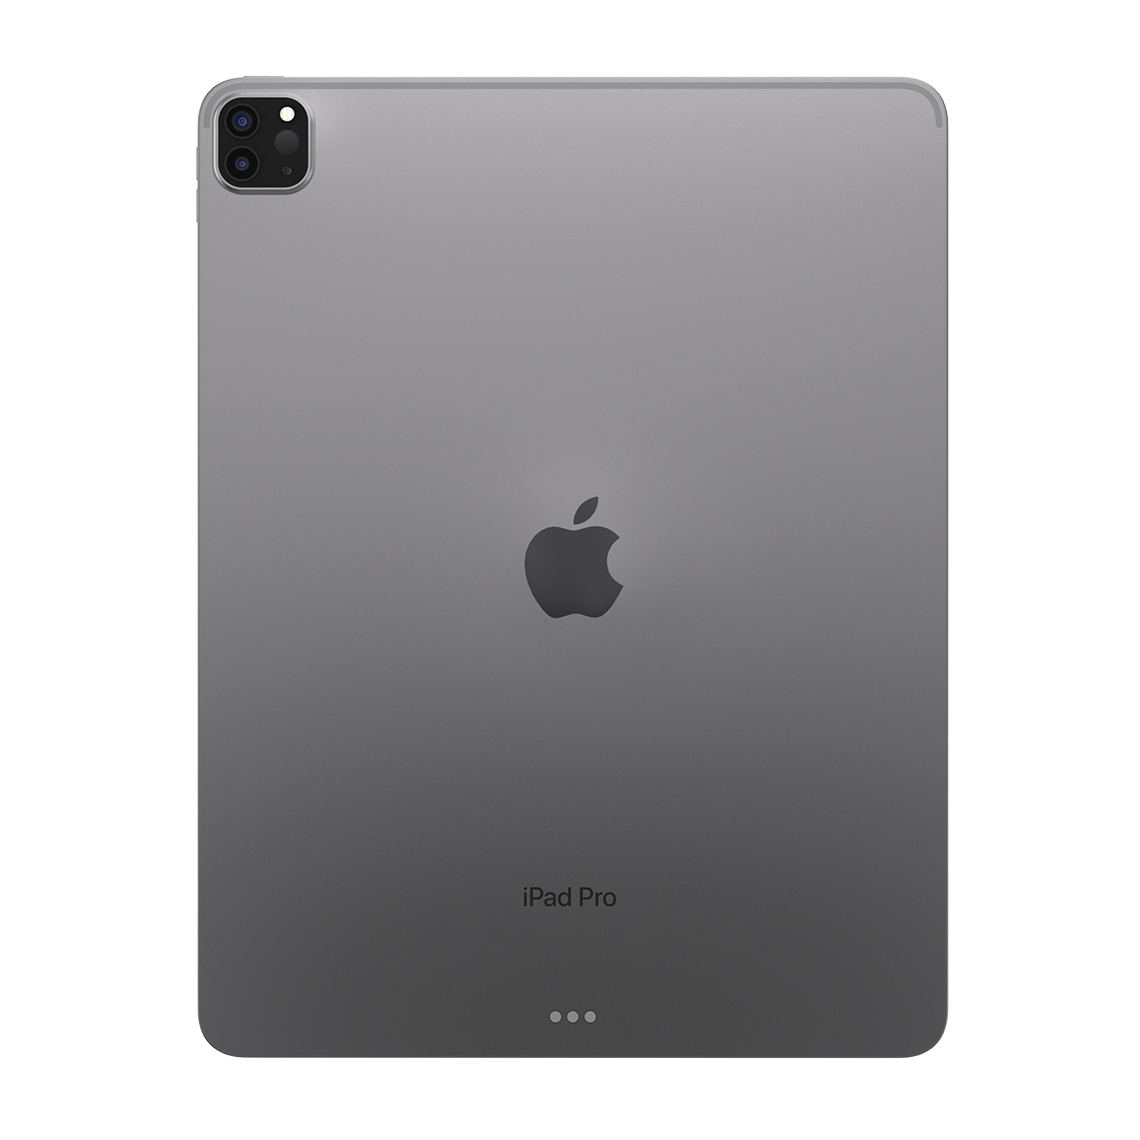 Apple iPad Pro 12.9-inch 5th Generation - Space Gray - 512GB, Wi-Fi + Cellular, Open Box